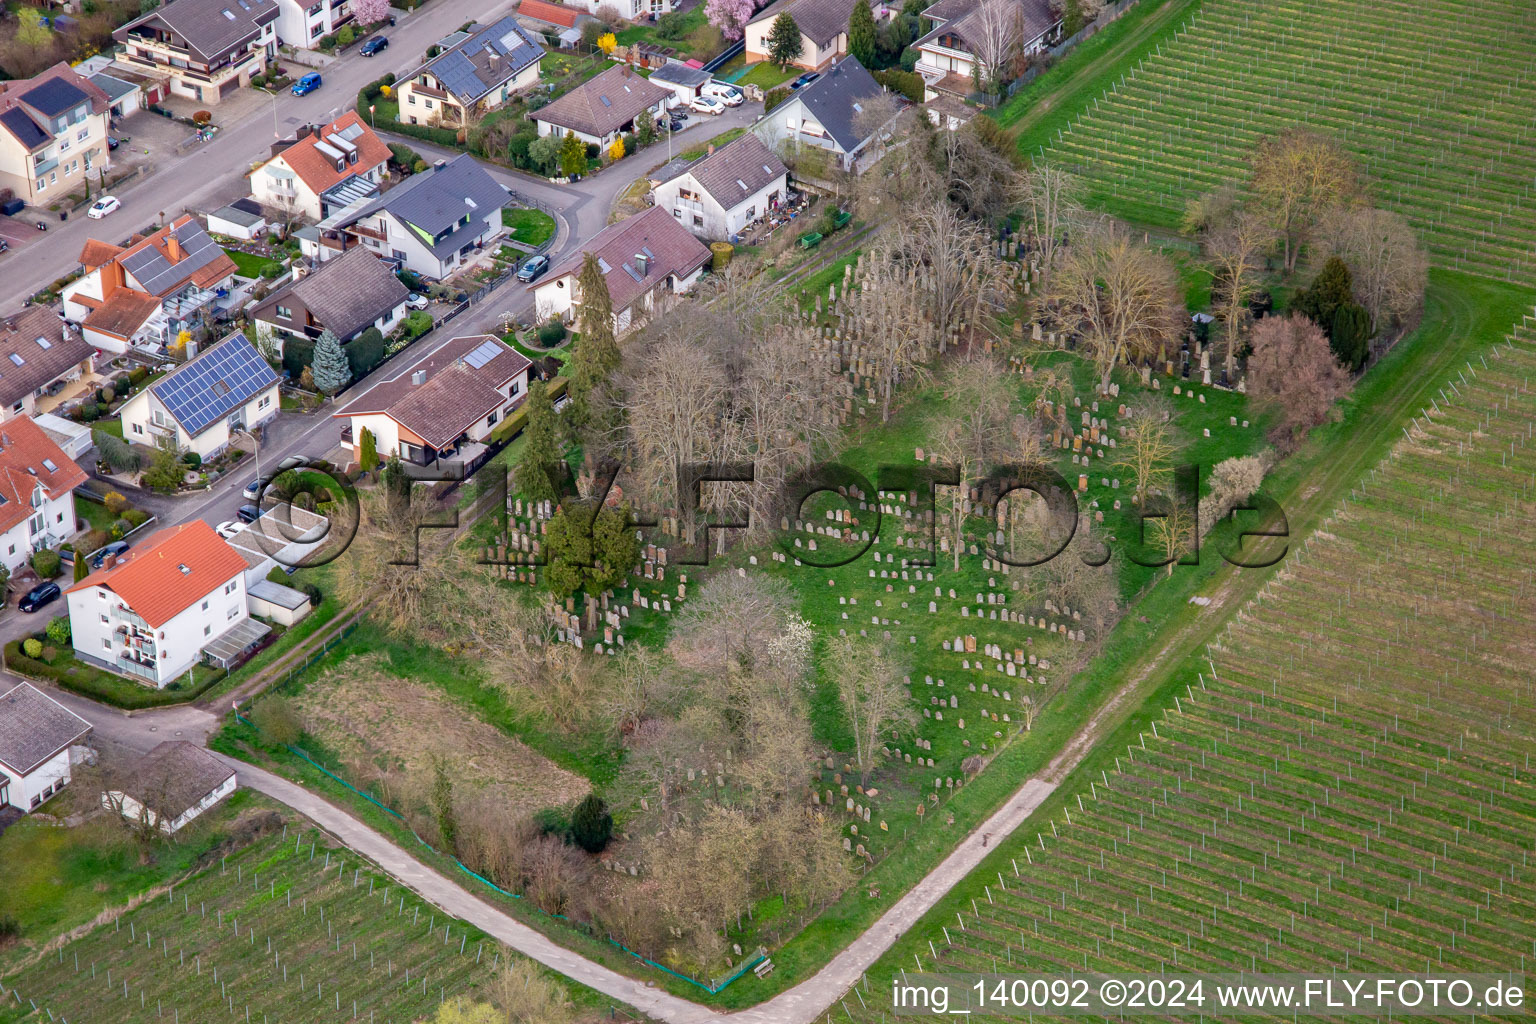 Aerial view of Jewish cemetery Ingenheim in the district Ingenheim in Billigheim-Ingenheim in the state Rhineland-Palatinate, Germany